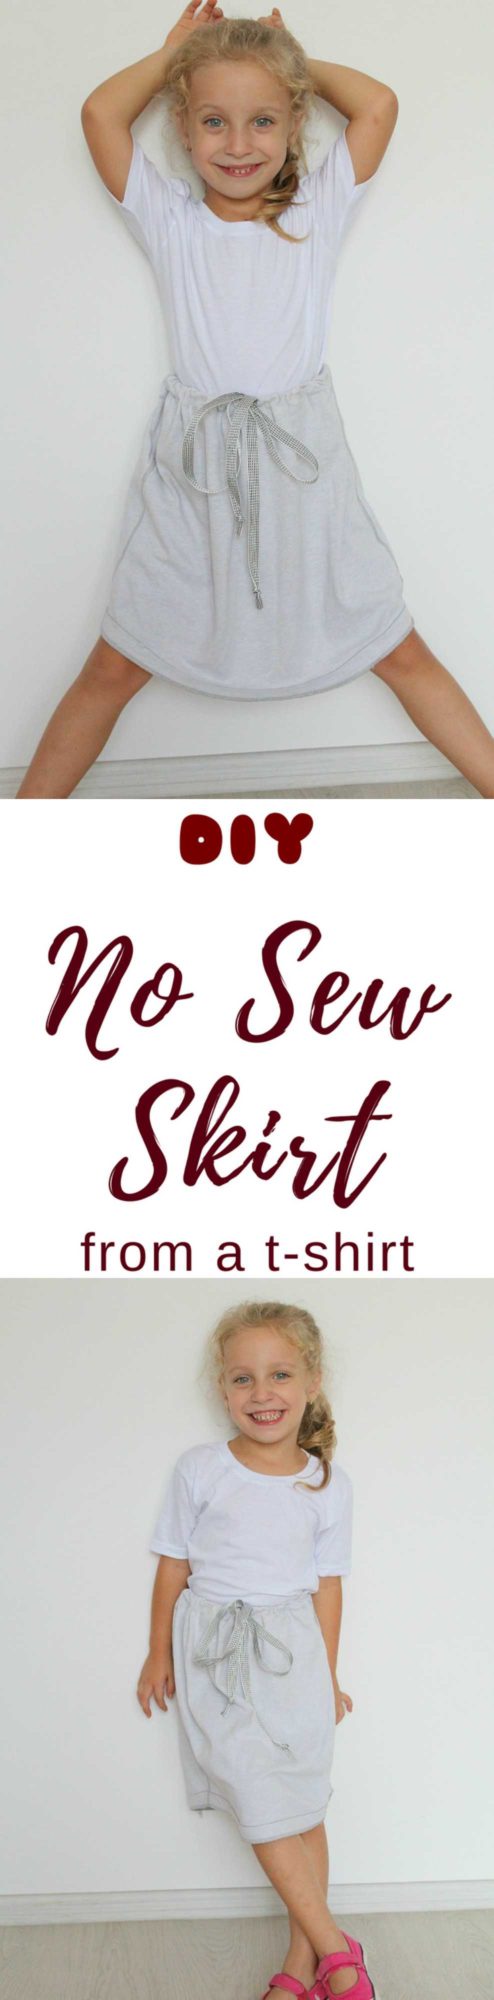 DIY No sew skirt